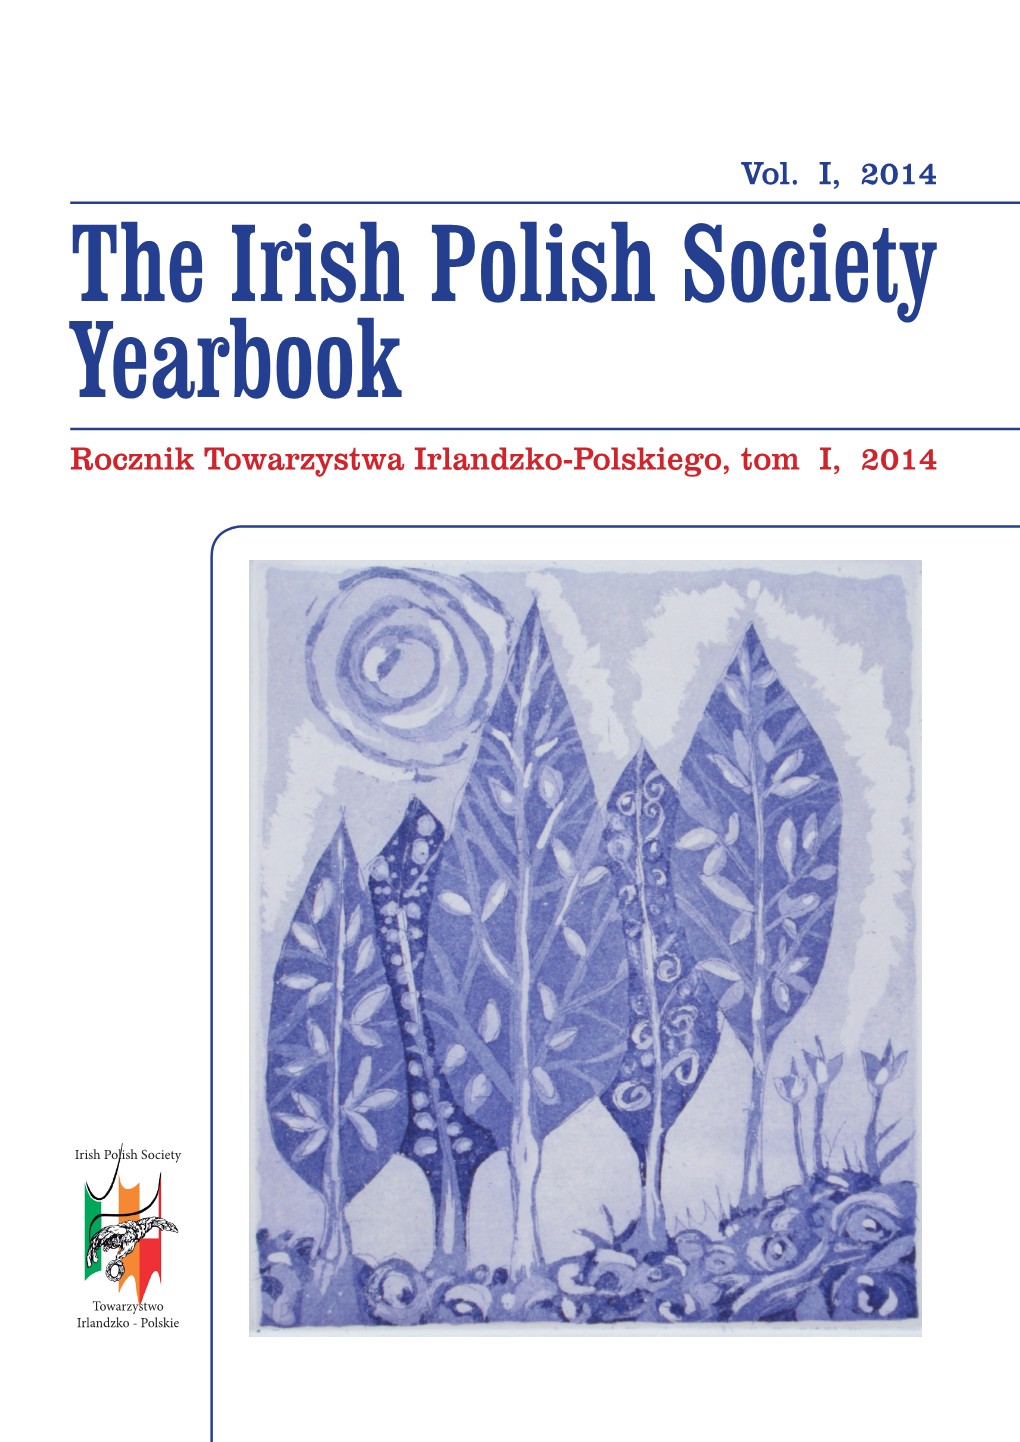 The Irish Polish Society Yearbook Vol